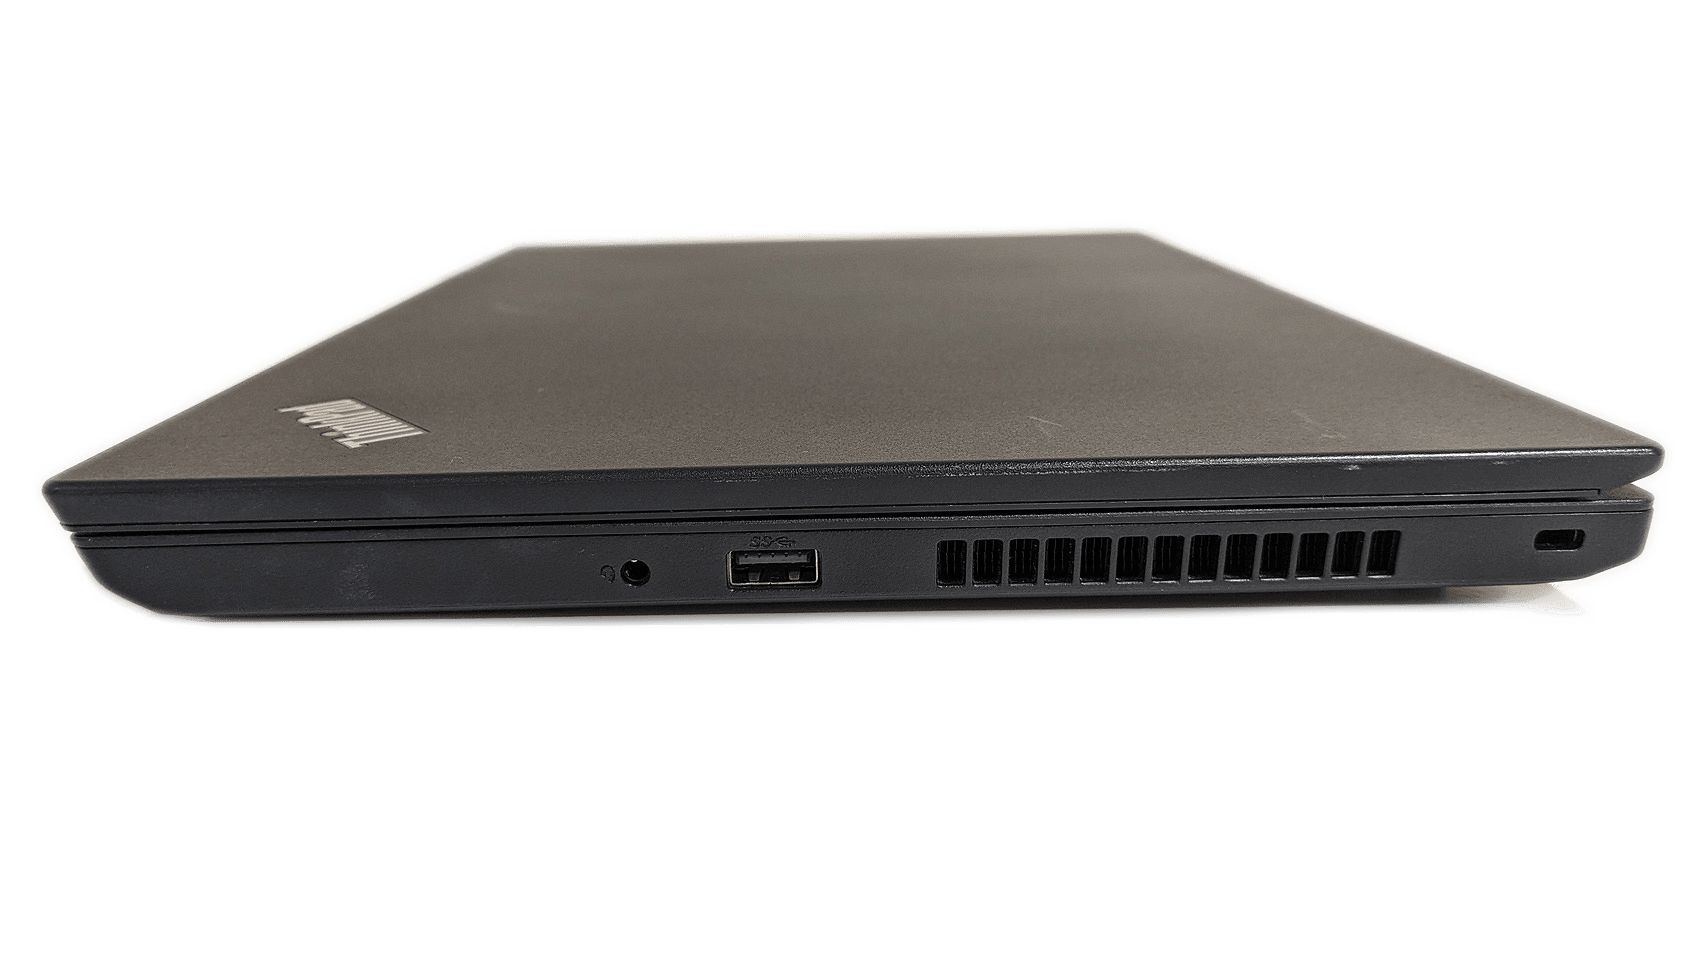 Lenovo ThinkPad L490 14" 1920x1080 i5-8265U 8GB 256GB SSD 2+ часа бате